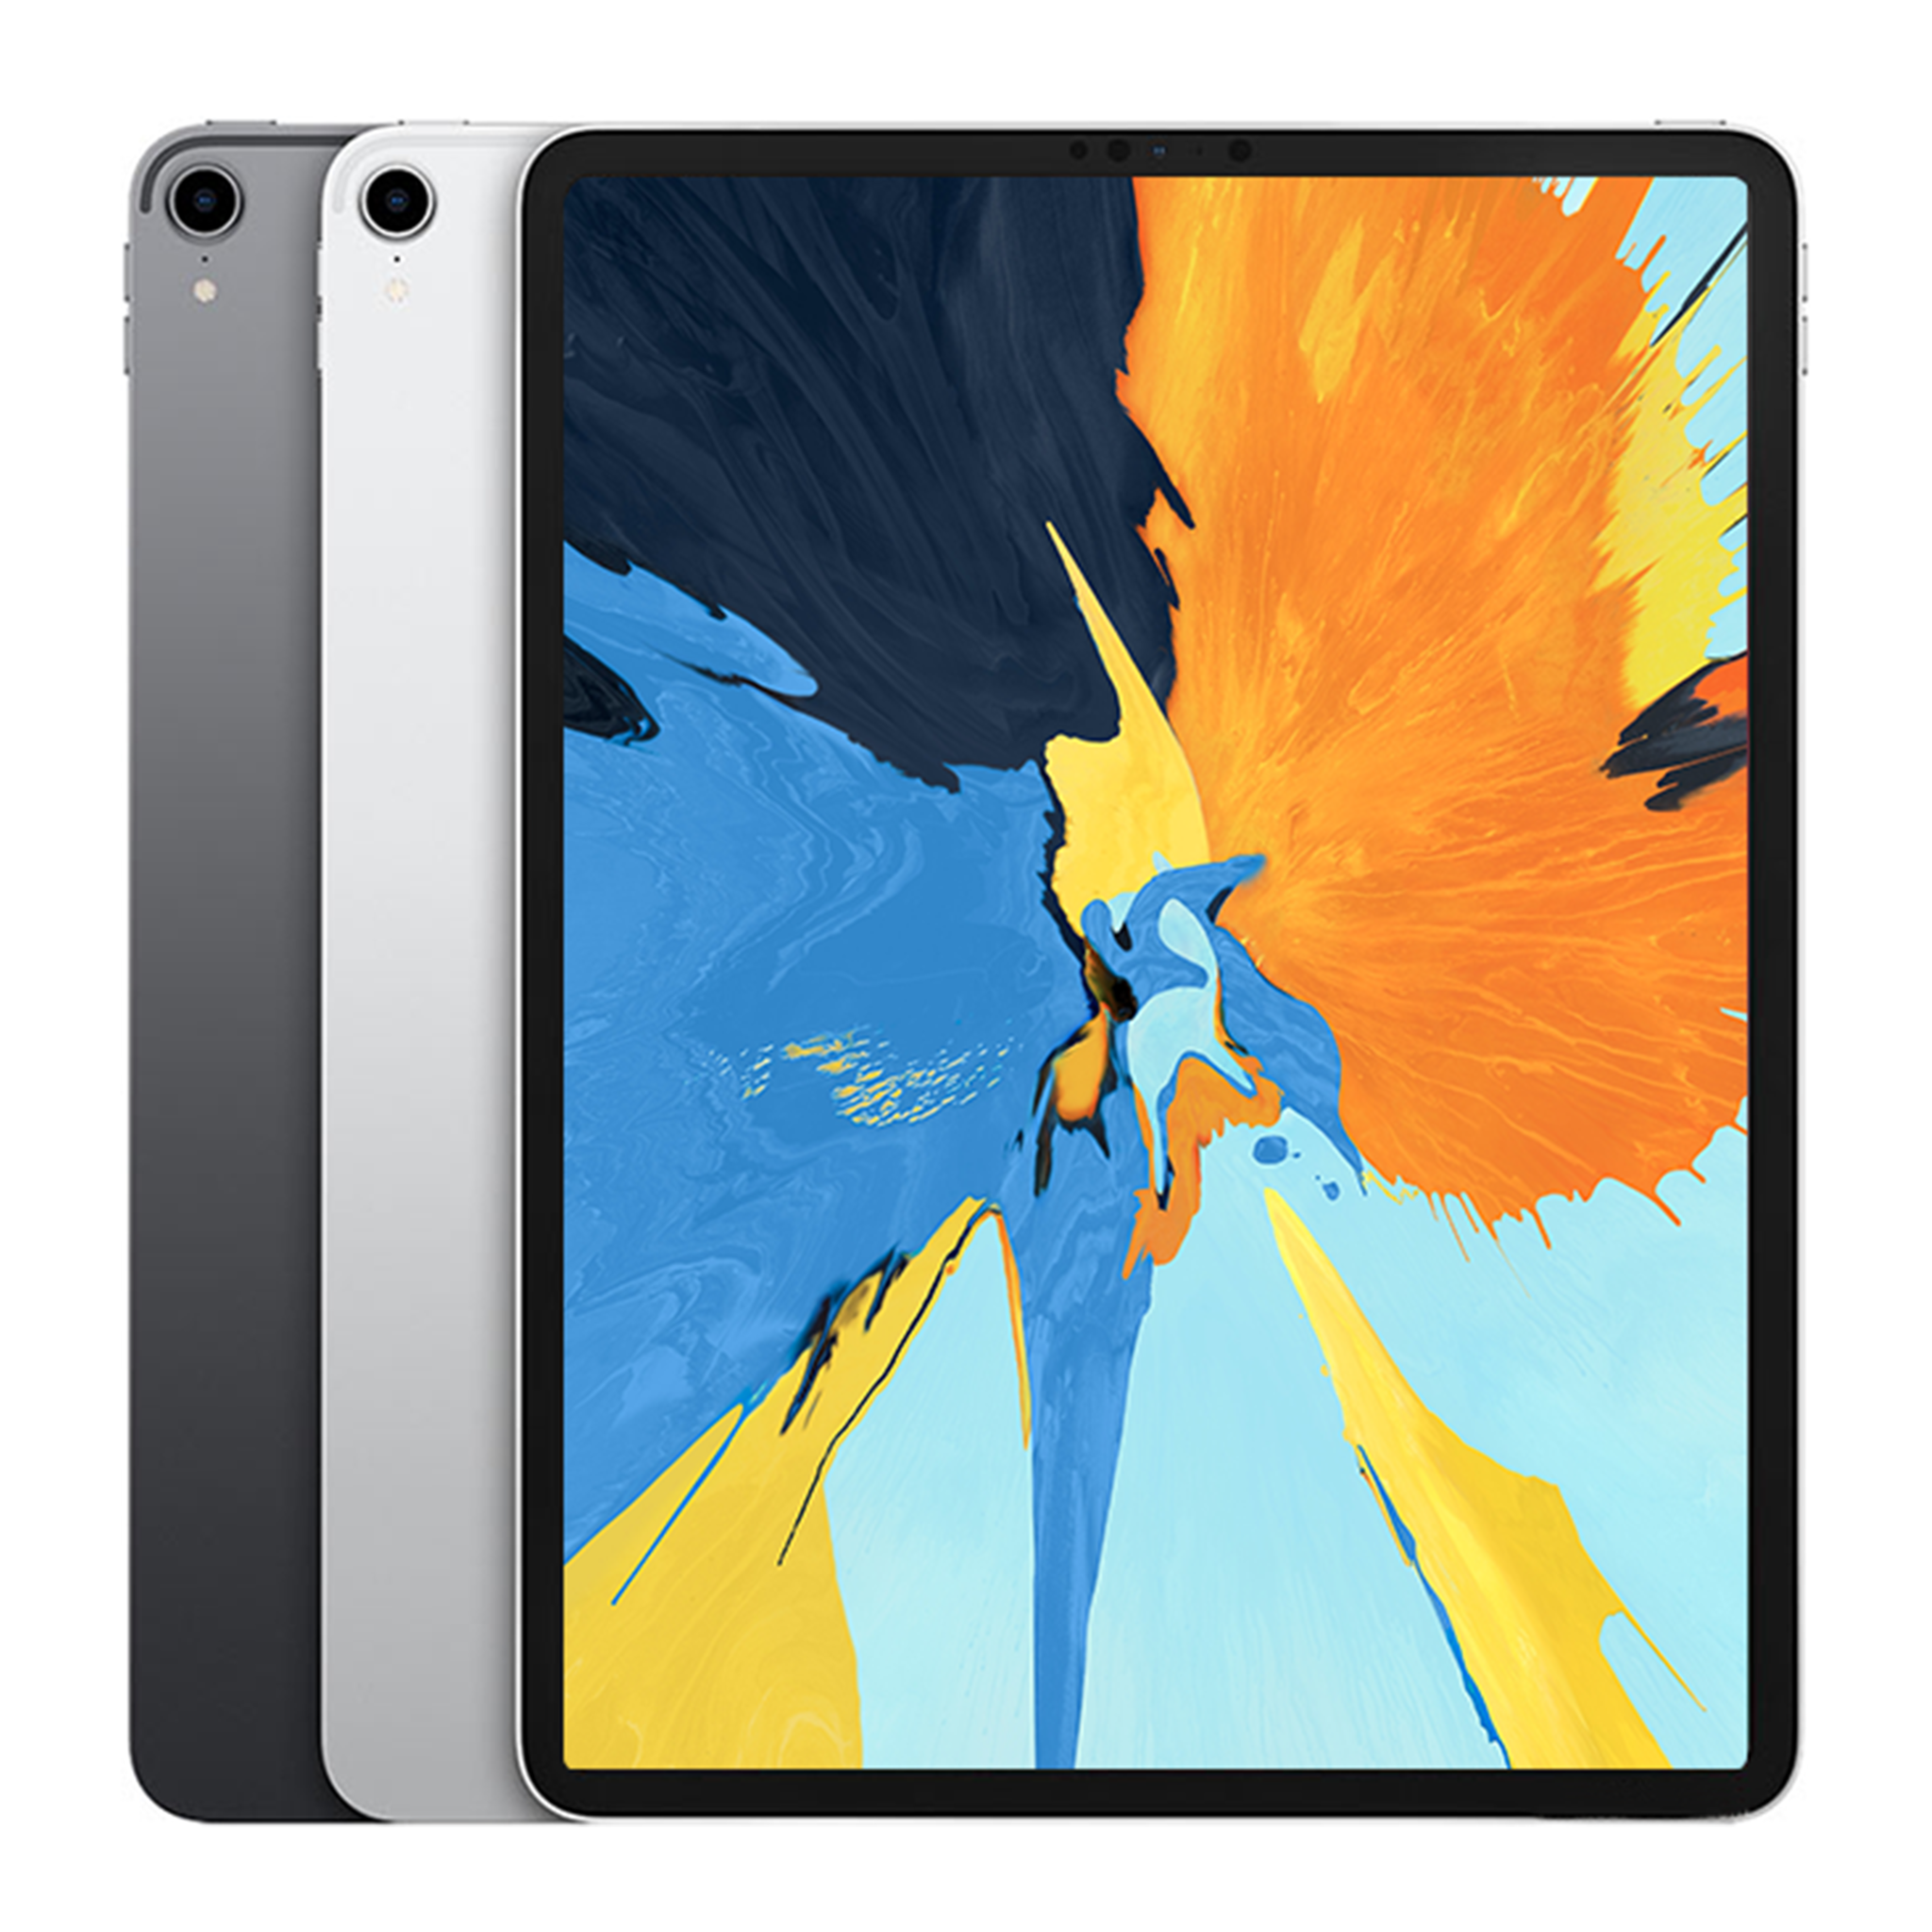  iPad Pro 12.9